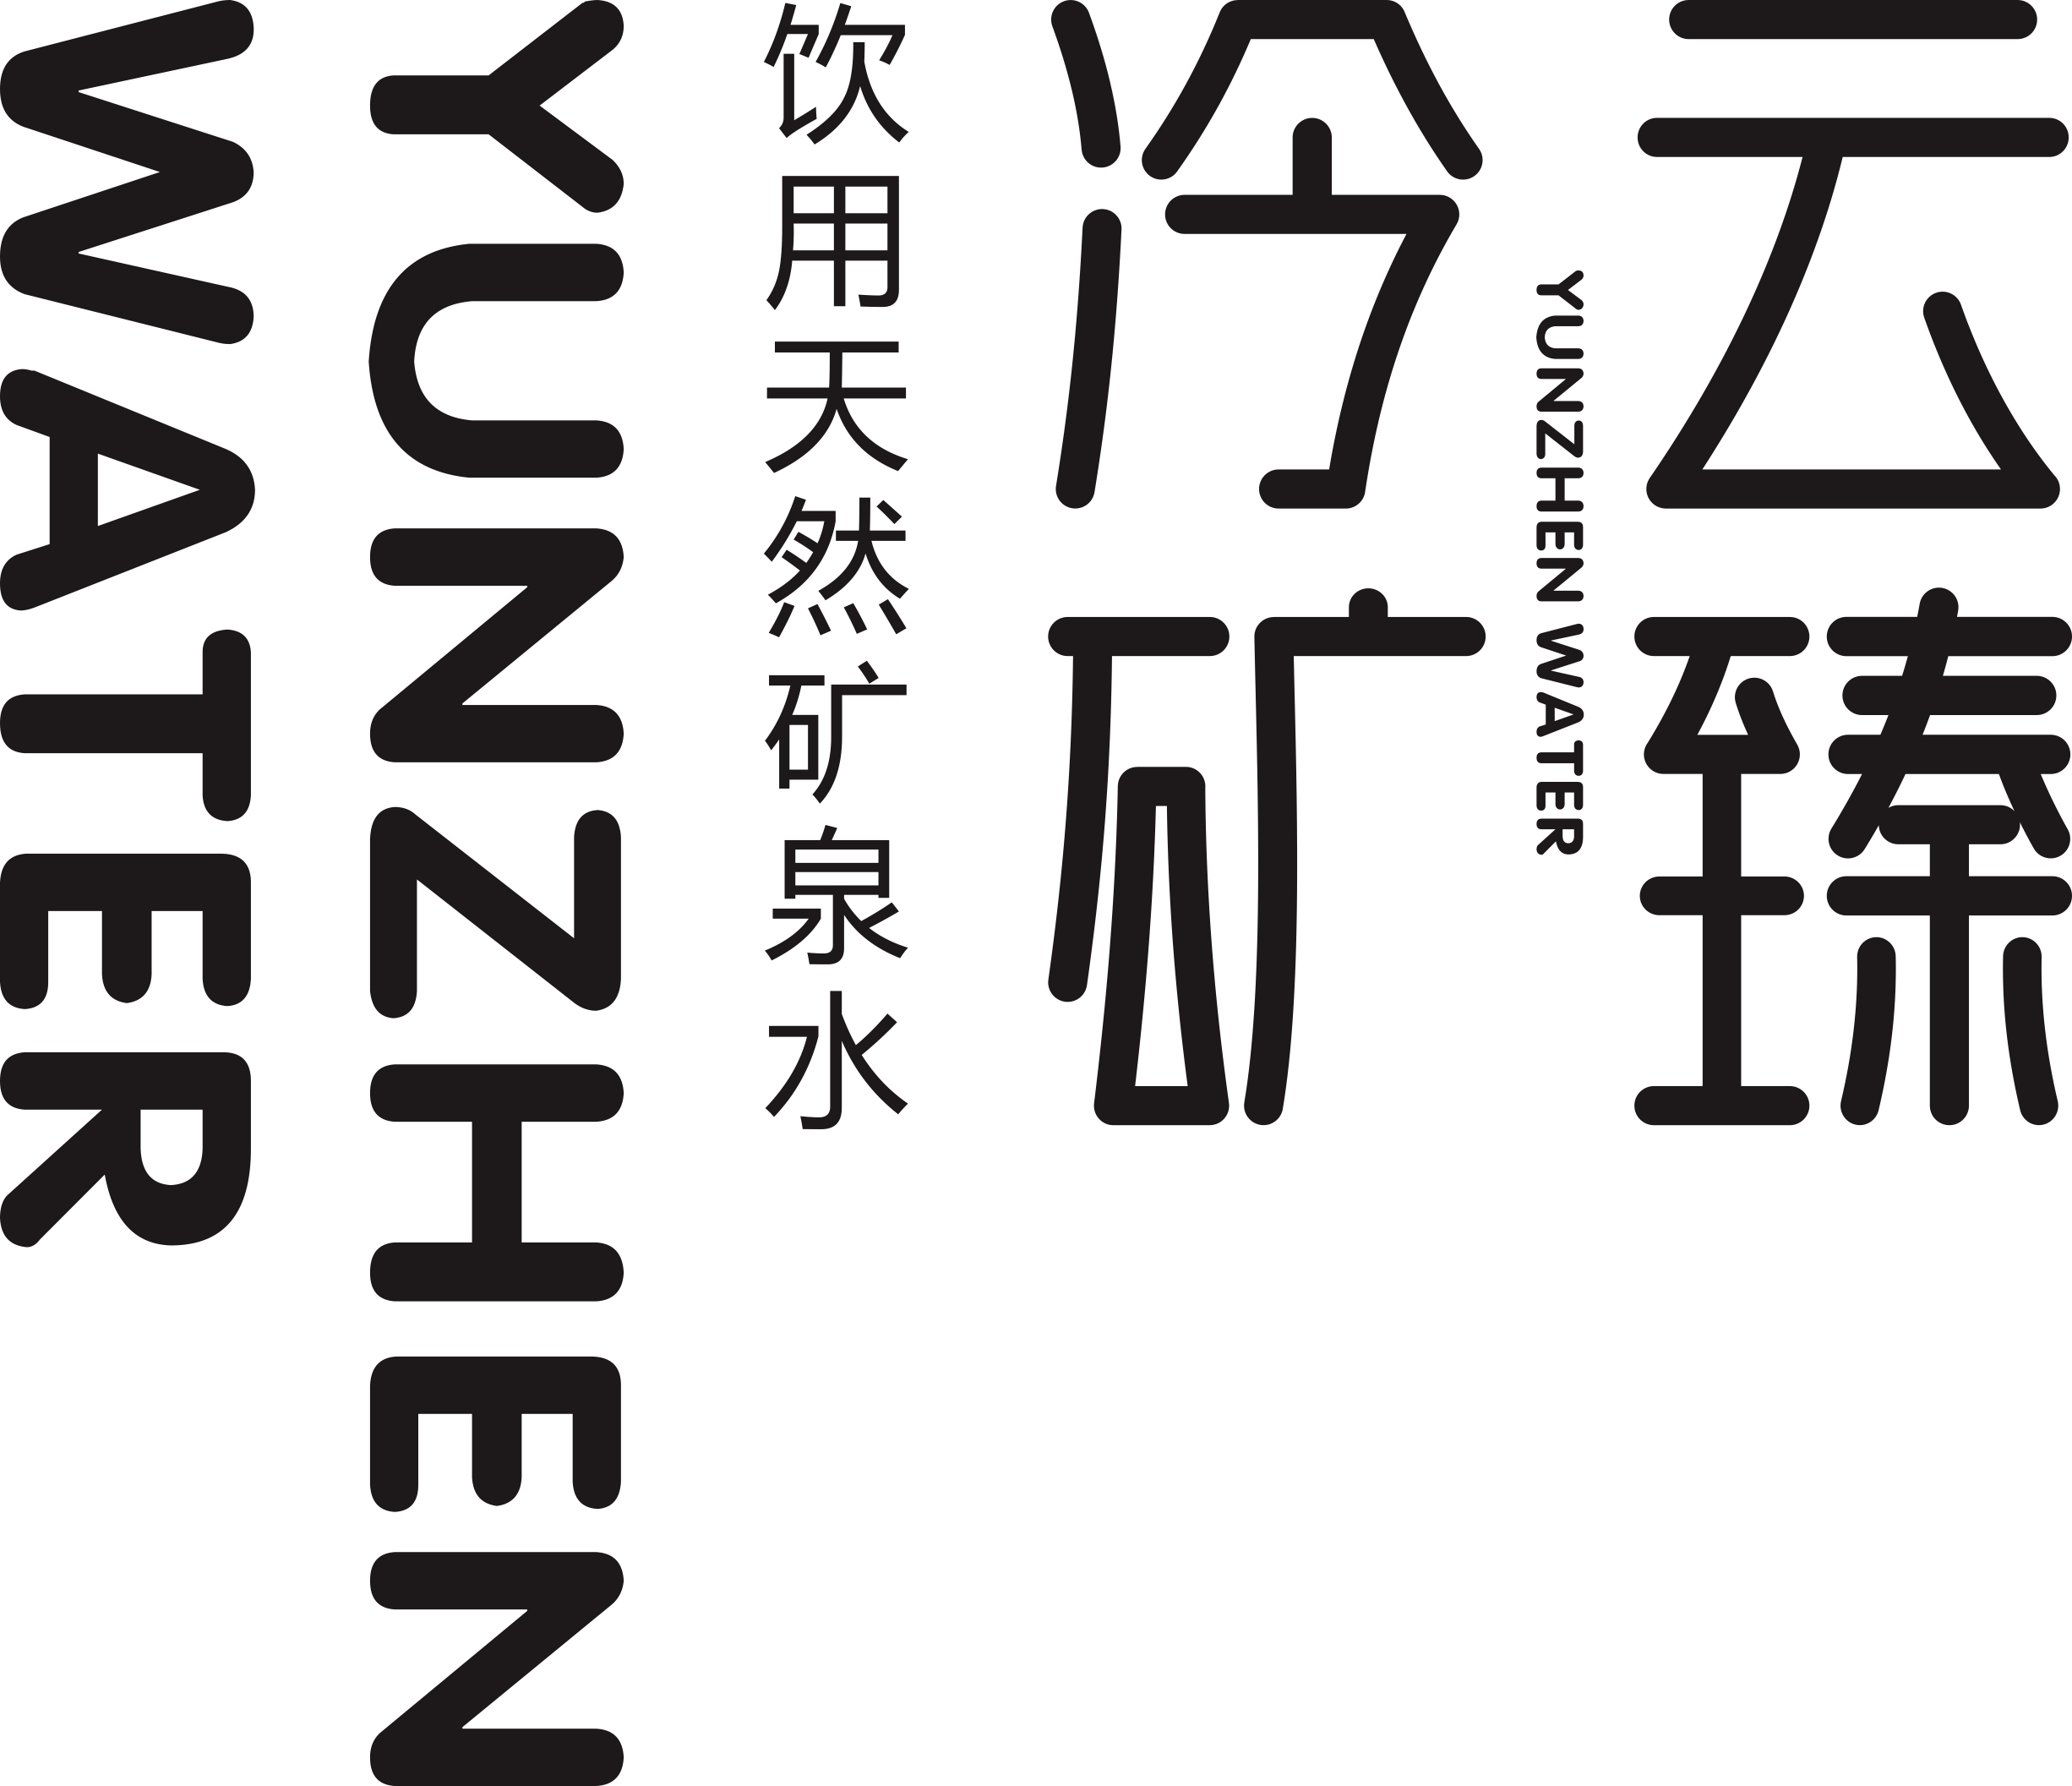 云臻冷矿-文字logo.png